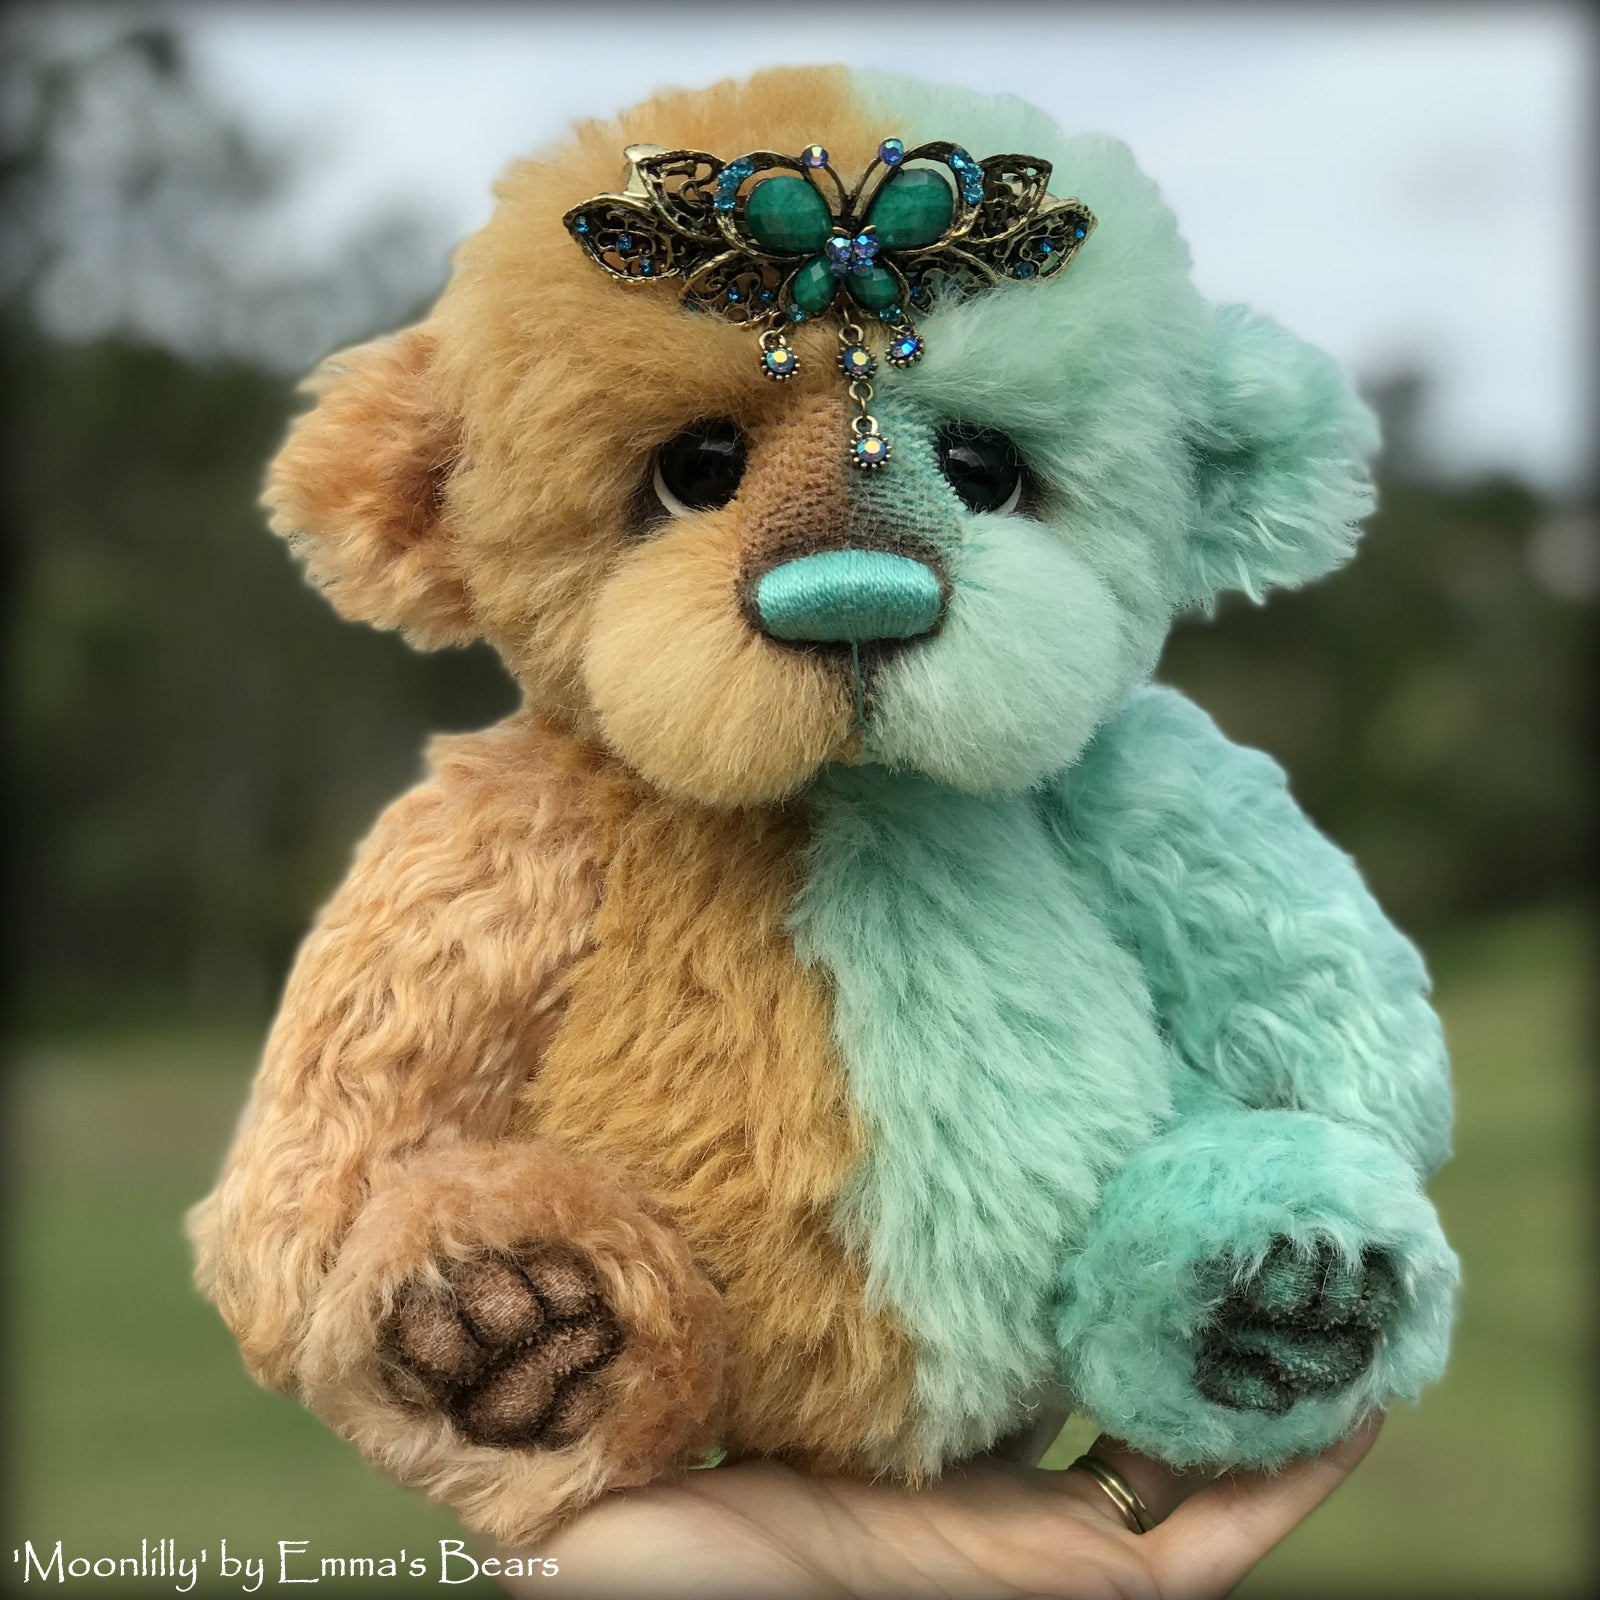 Moonlilly - 10" Mohair and Alpaca artist bear by Emma's Bears - OOAK